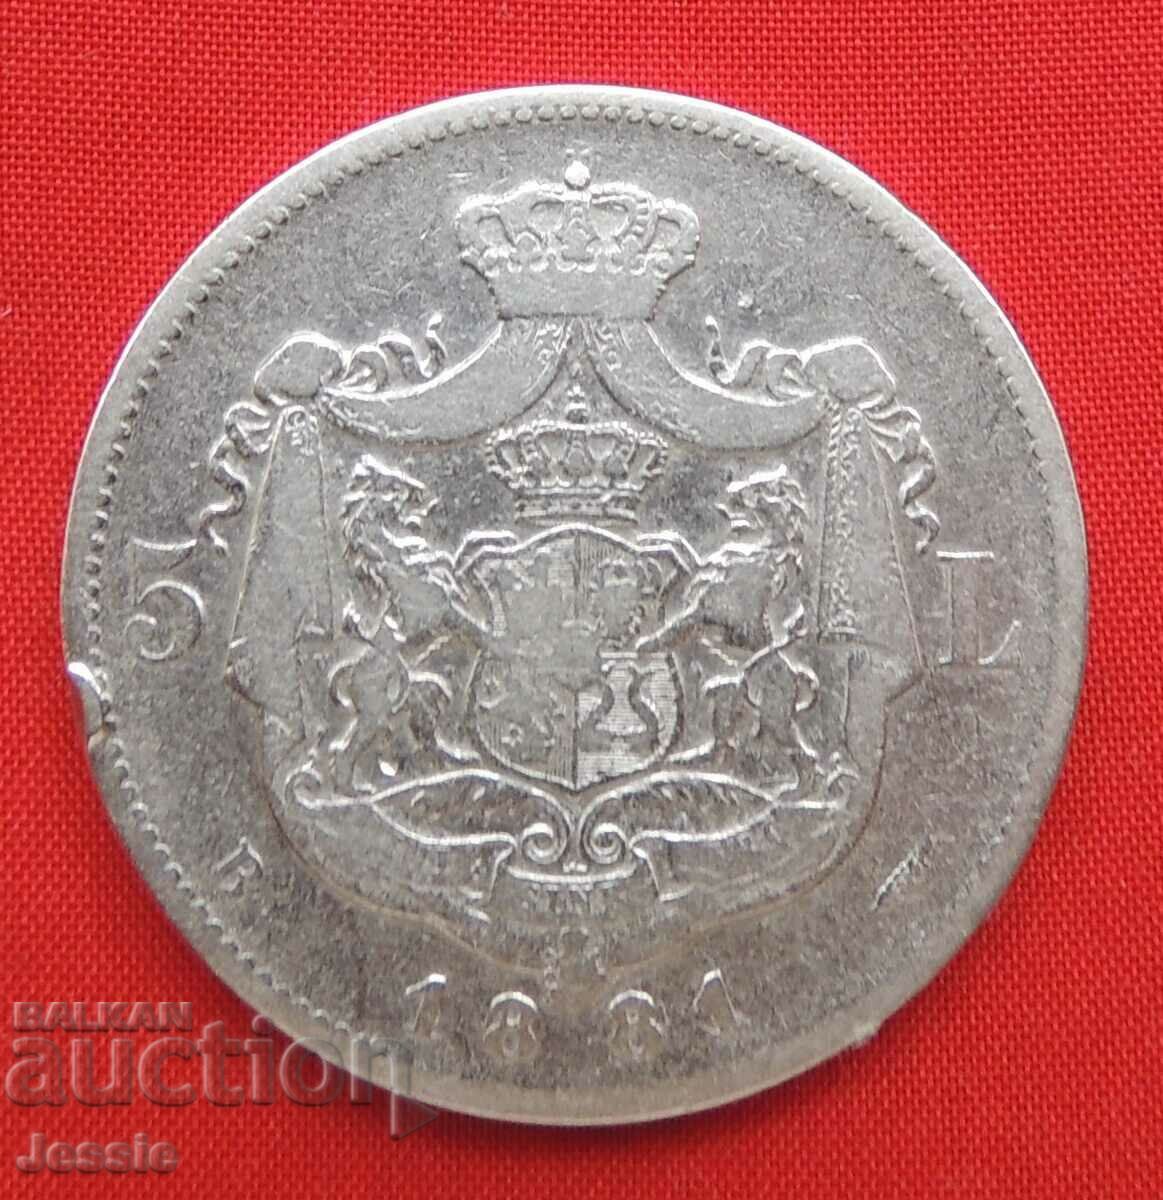 5 lei 1881 Romania argint